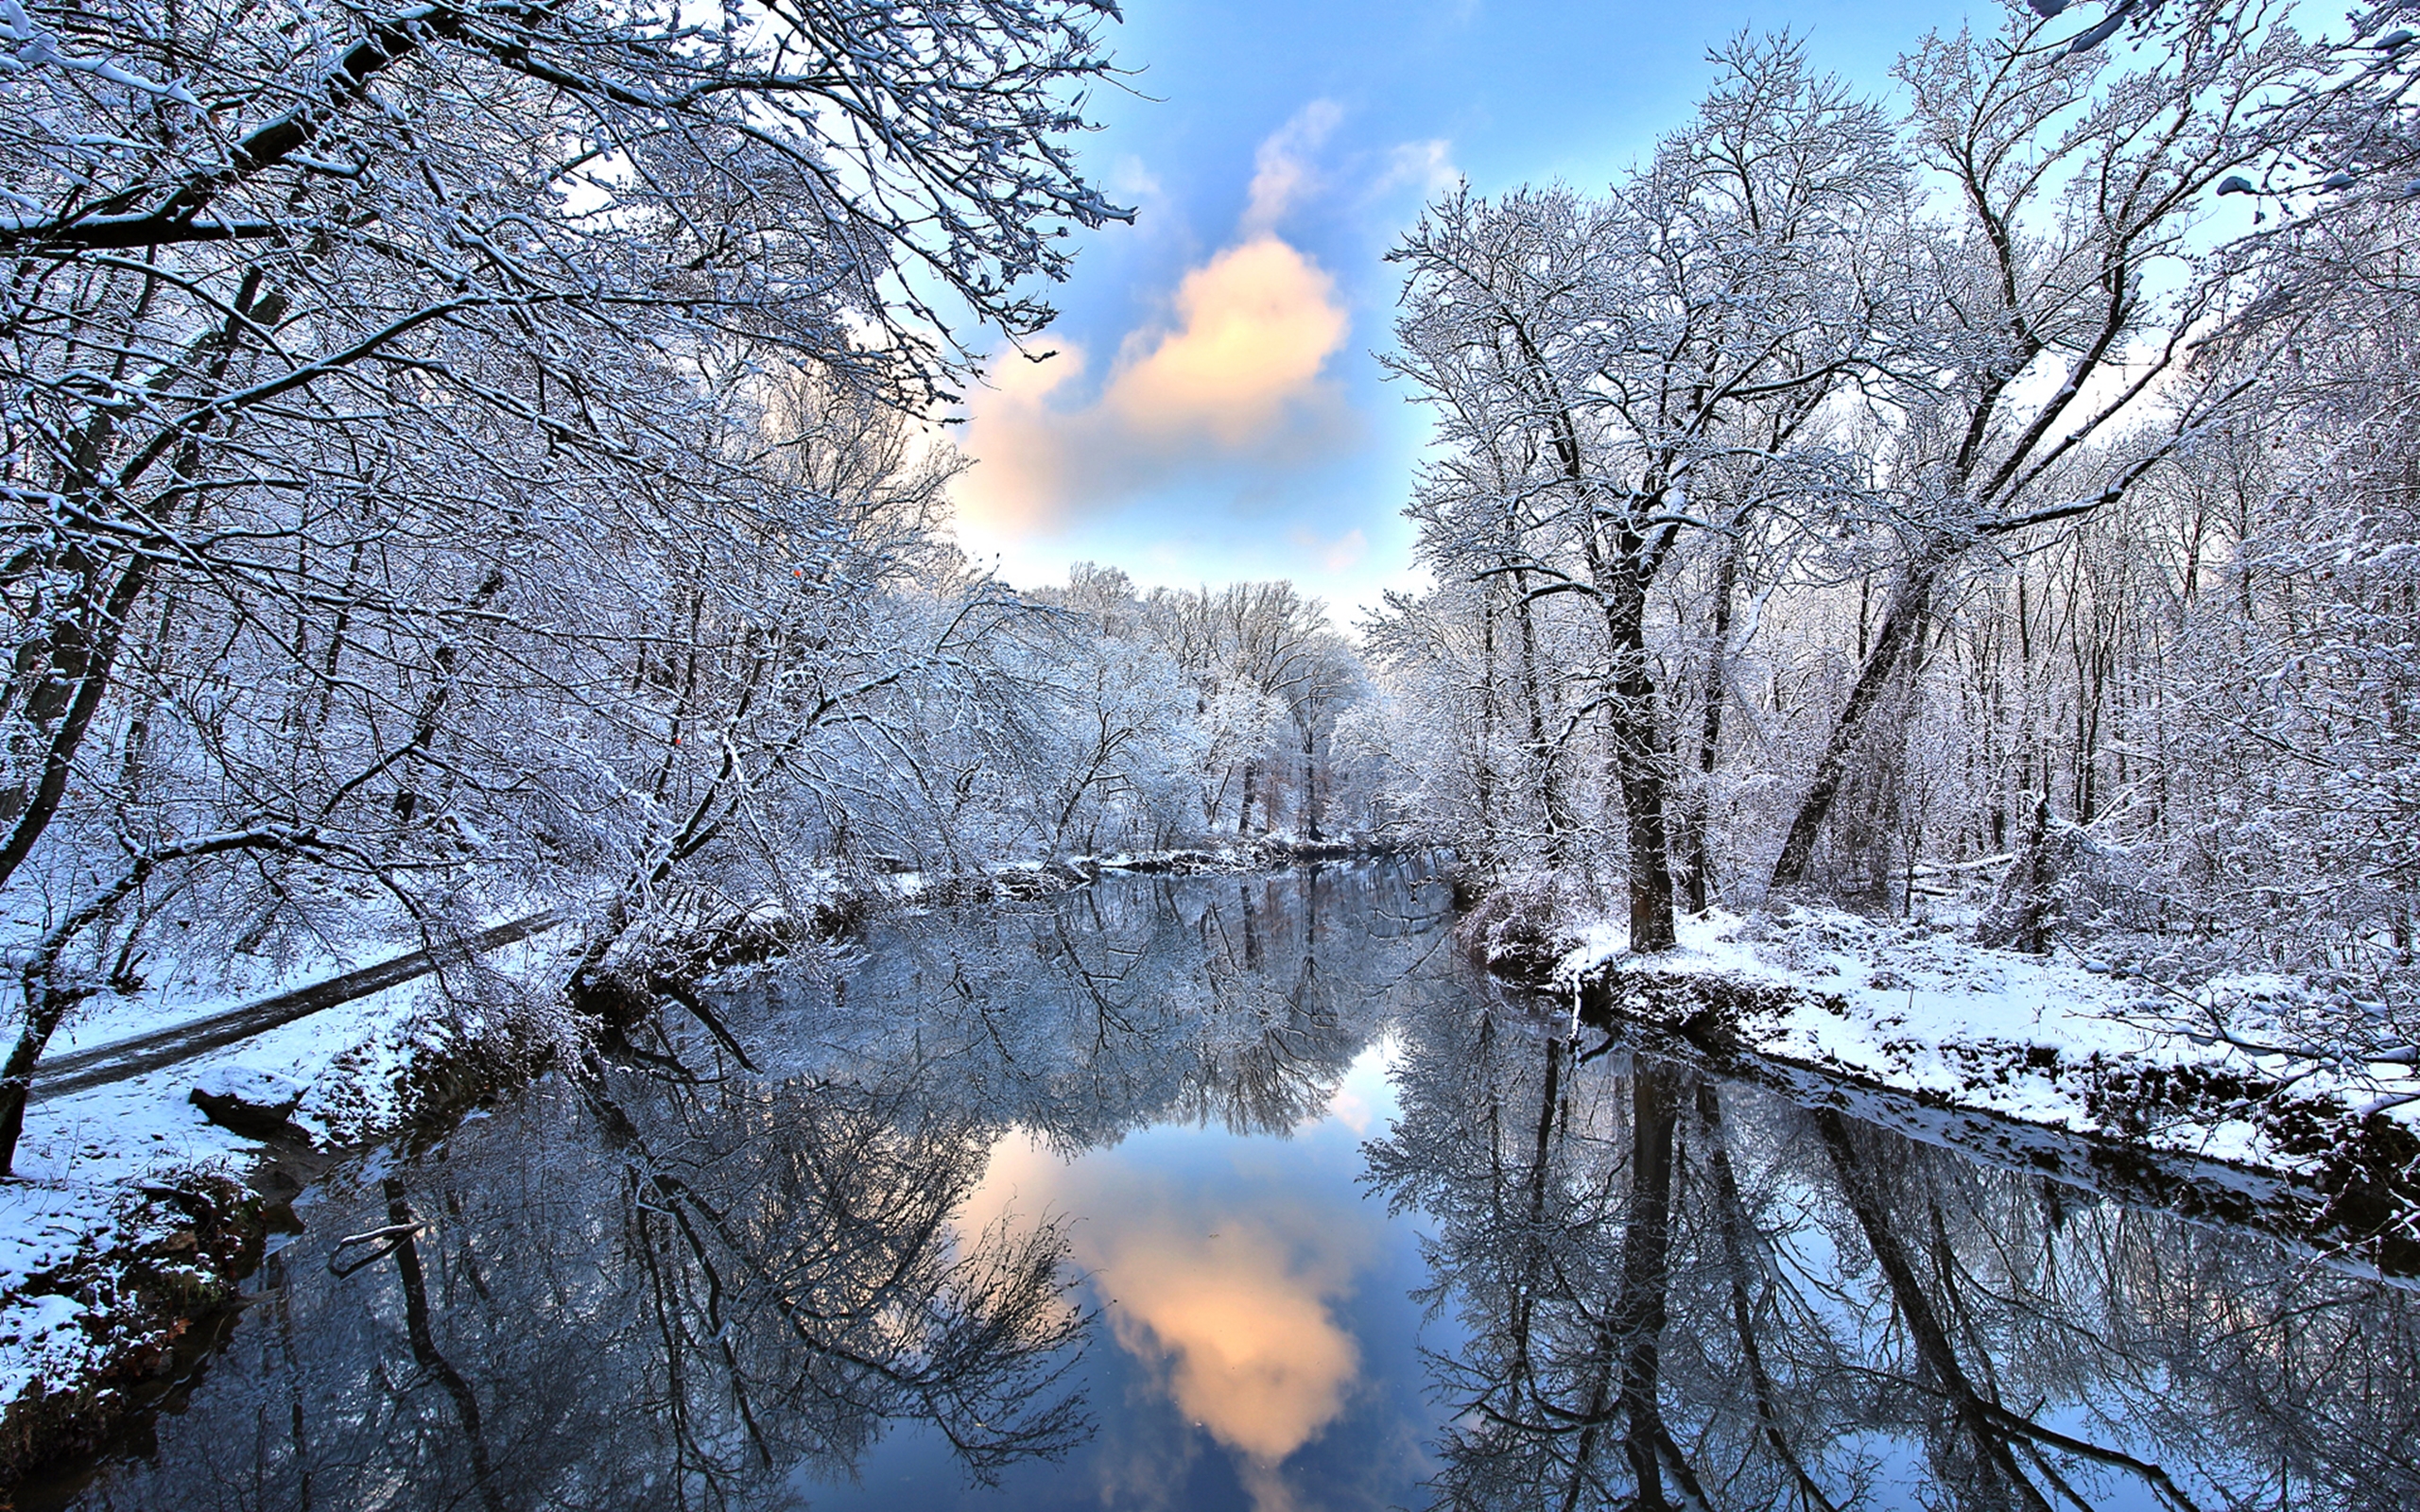 Картинка начало весны на телефон. Зимняя река. Ранняя зима. Природа зима.